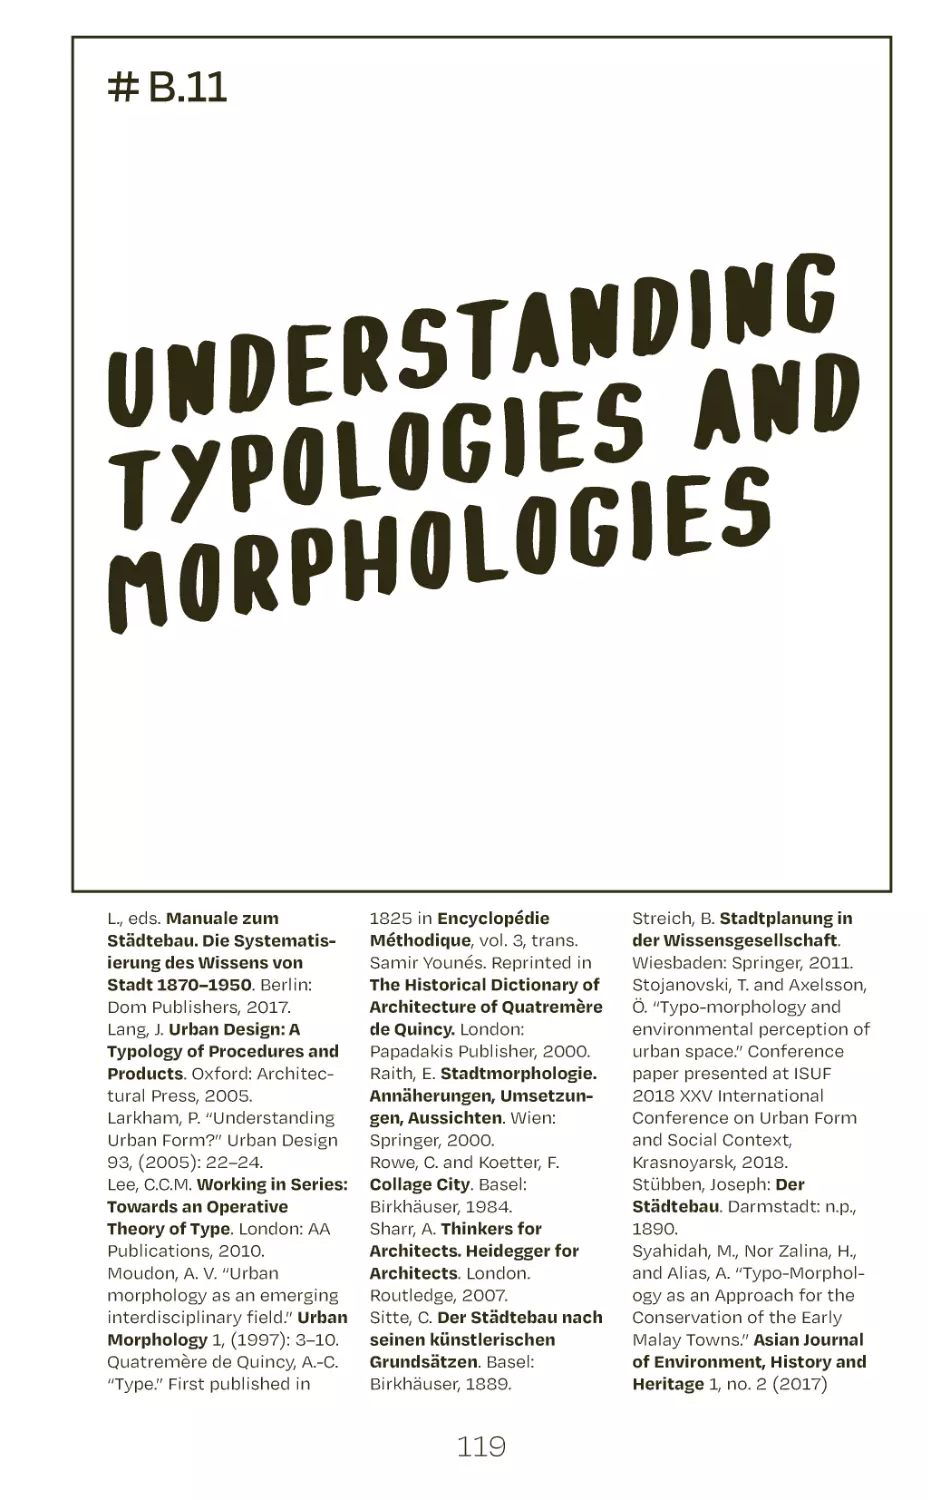 # B.11 understanding typologies and morphologies